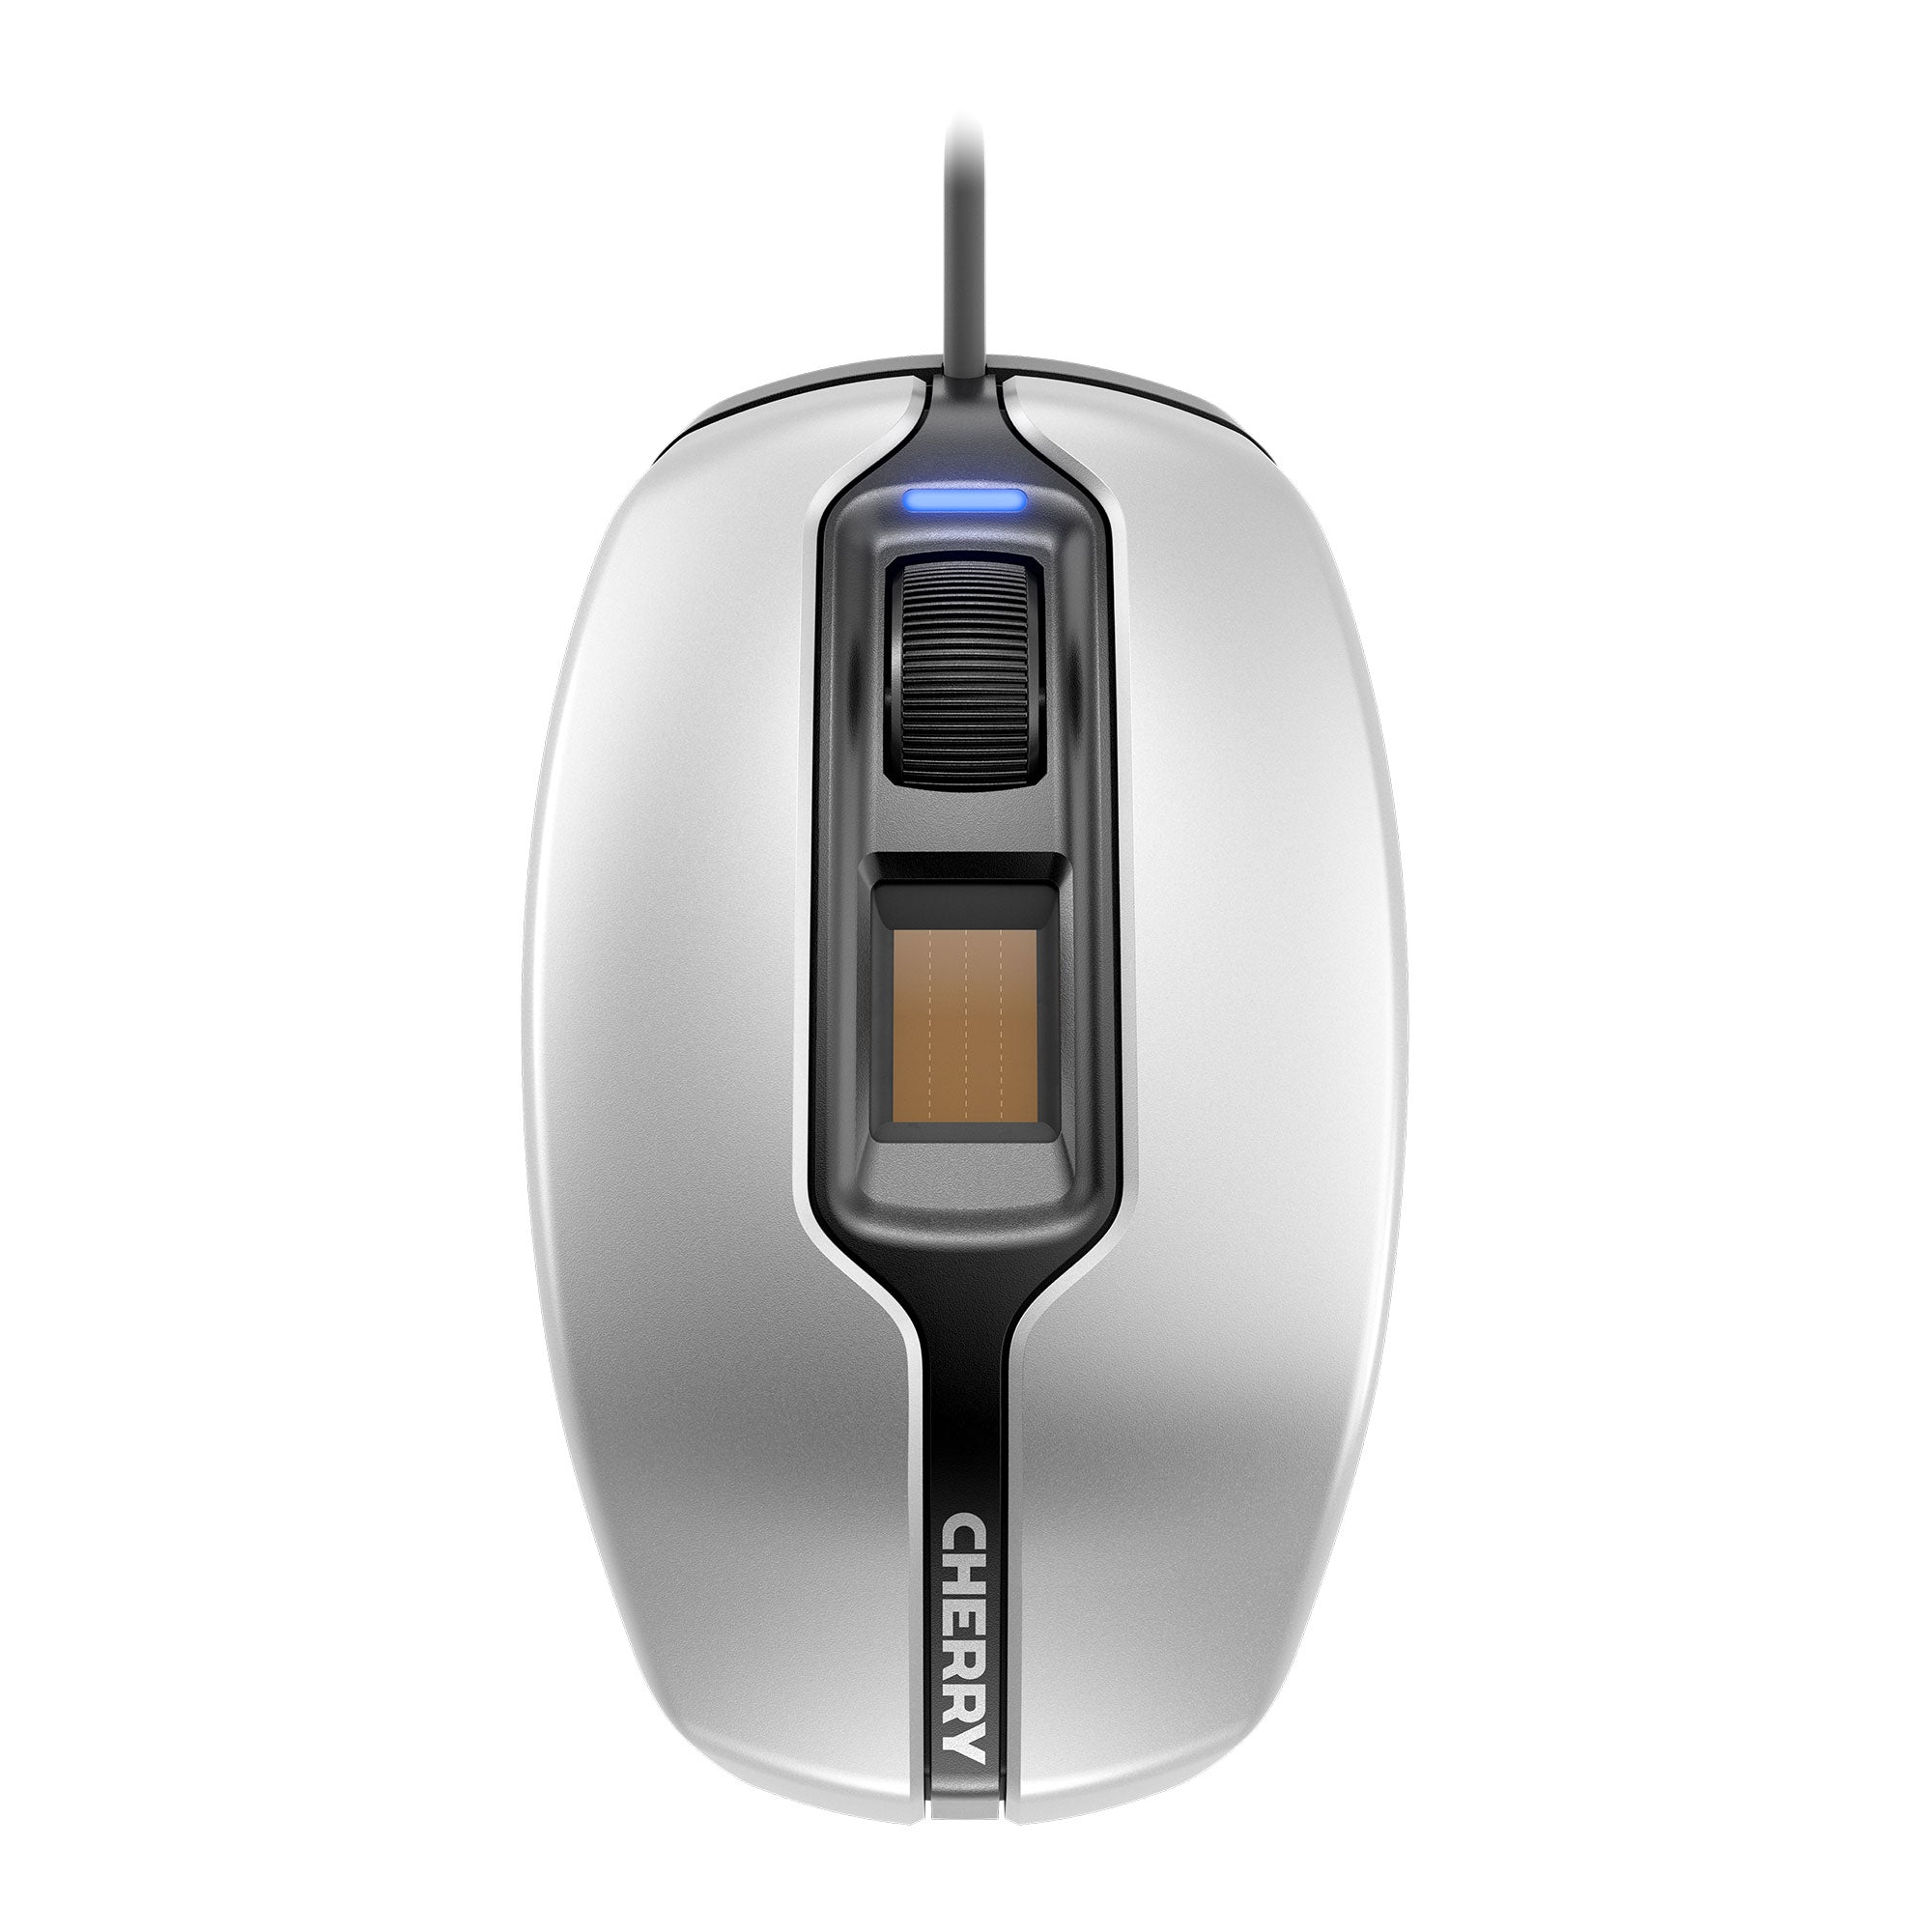 MC 4900 Corded Fingerprint Mouse